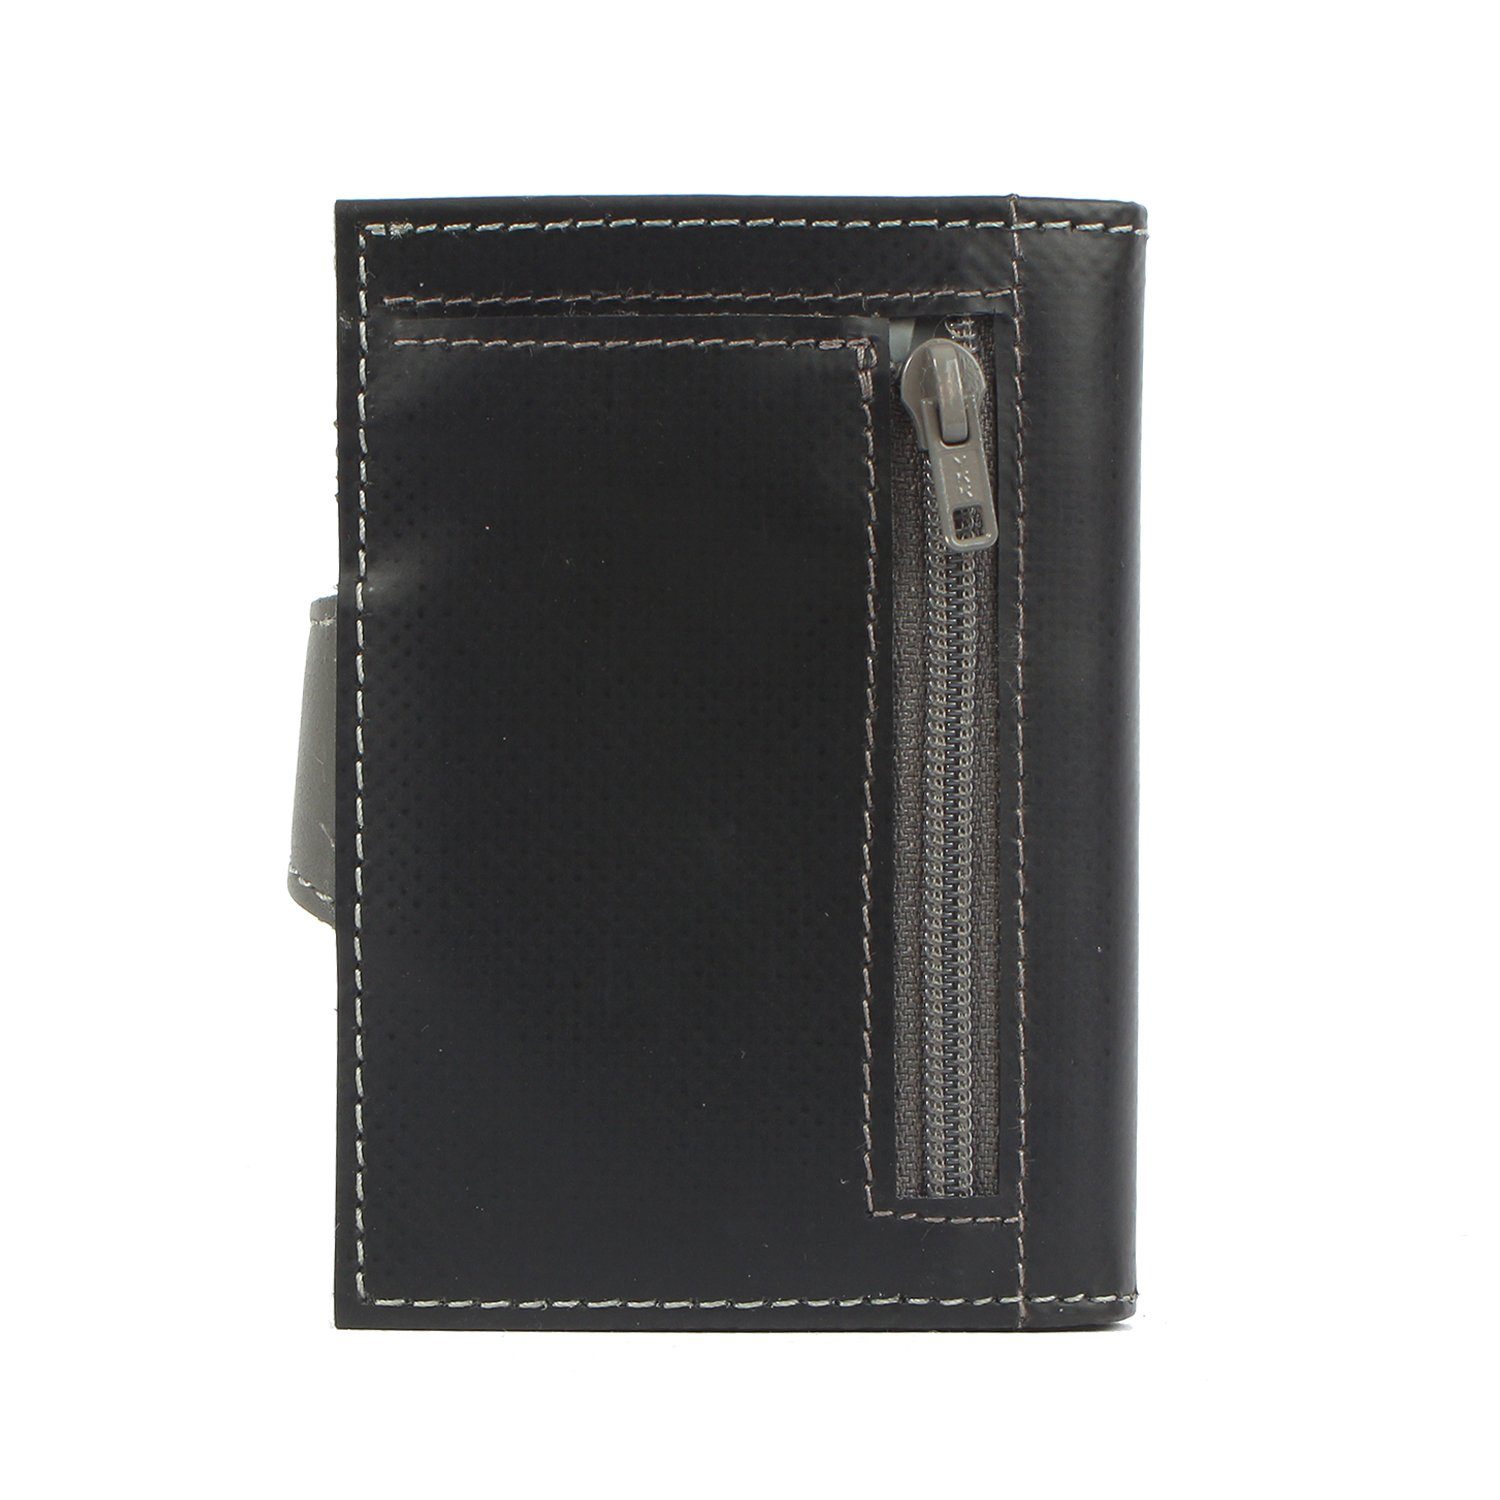 7clouds Mini Geldbörse noonyu double black tarpaulin, aus Kreditkartenbörse Upcycling Tarpaulin